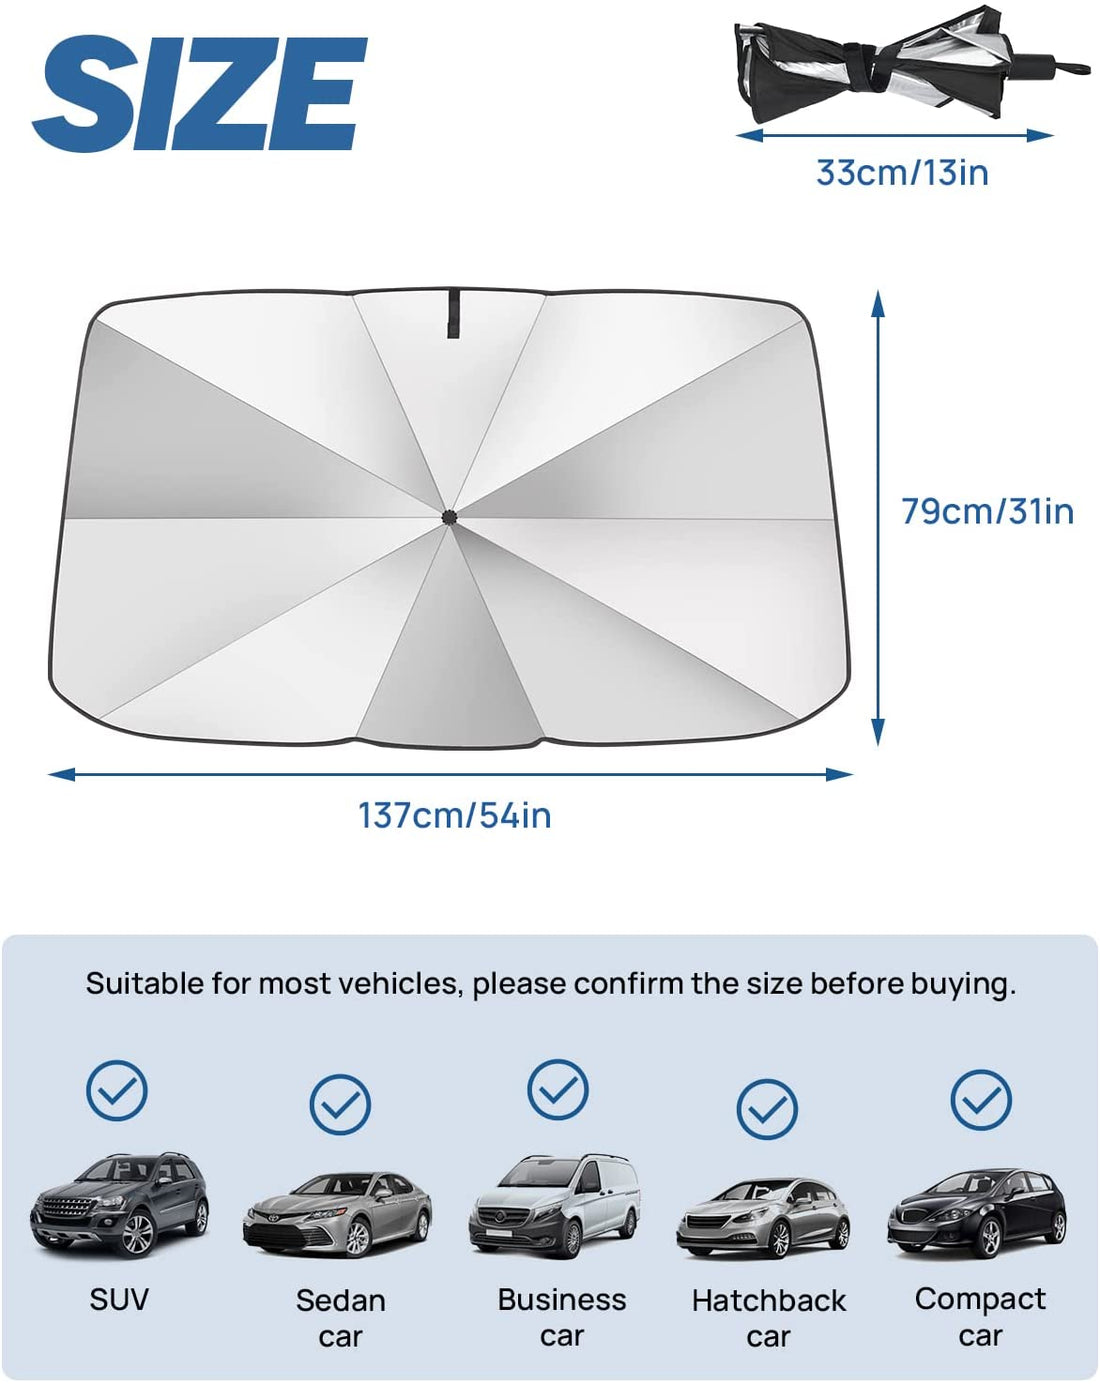 Car Windshield Sunshade Umbrella,Universal, 360° Rotation Bendable Shaft Foldable (54''x 31'')